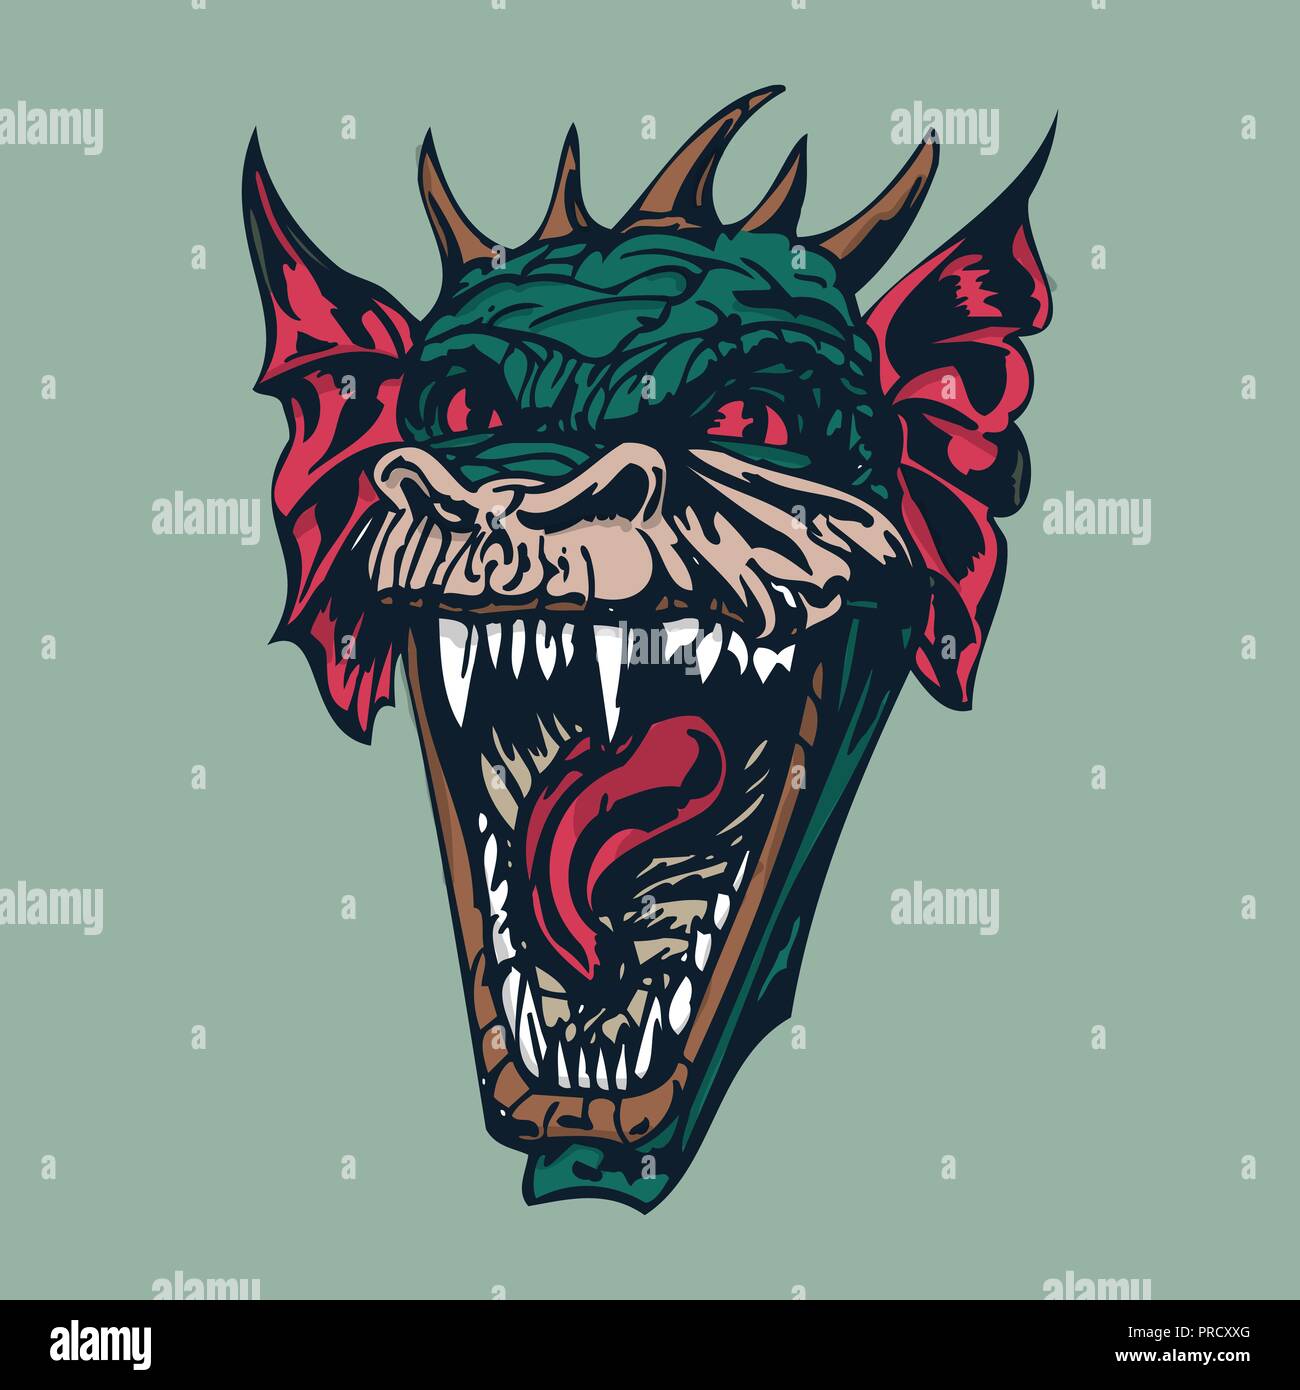 angry dragon head illustration. vector Illustration Stock Vector